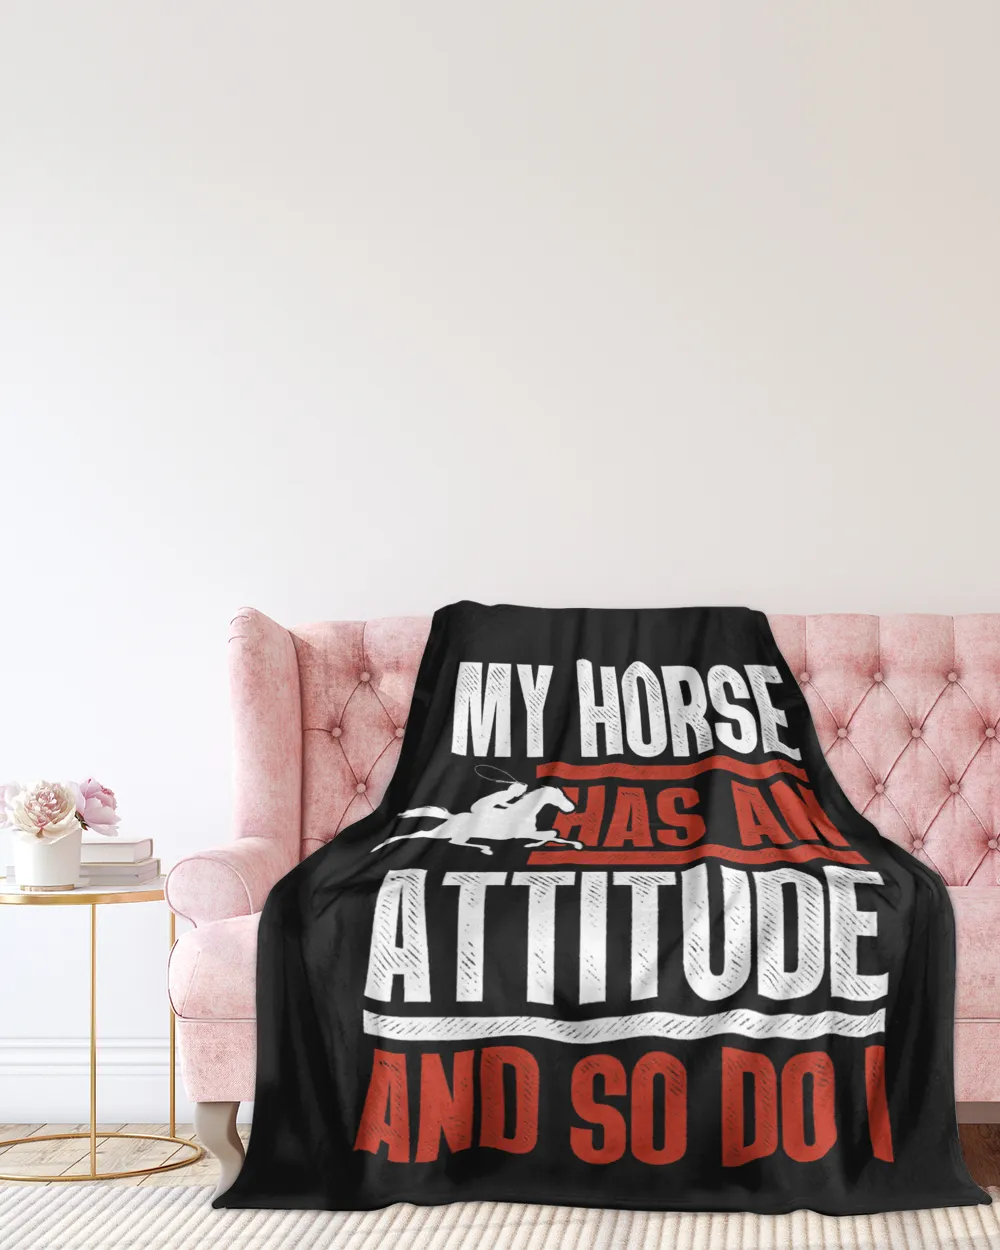 Horse Riding My horse has an attitude and so do I